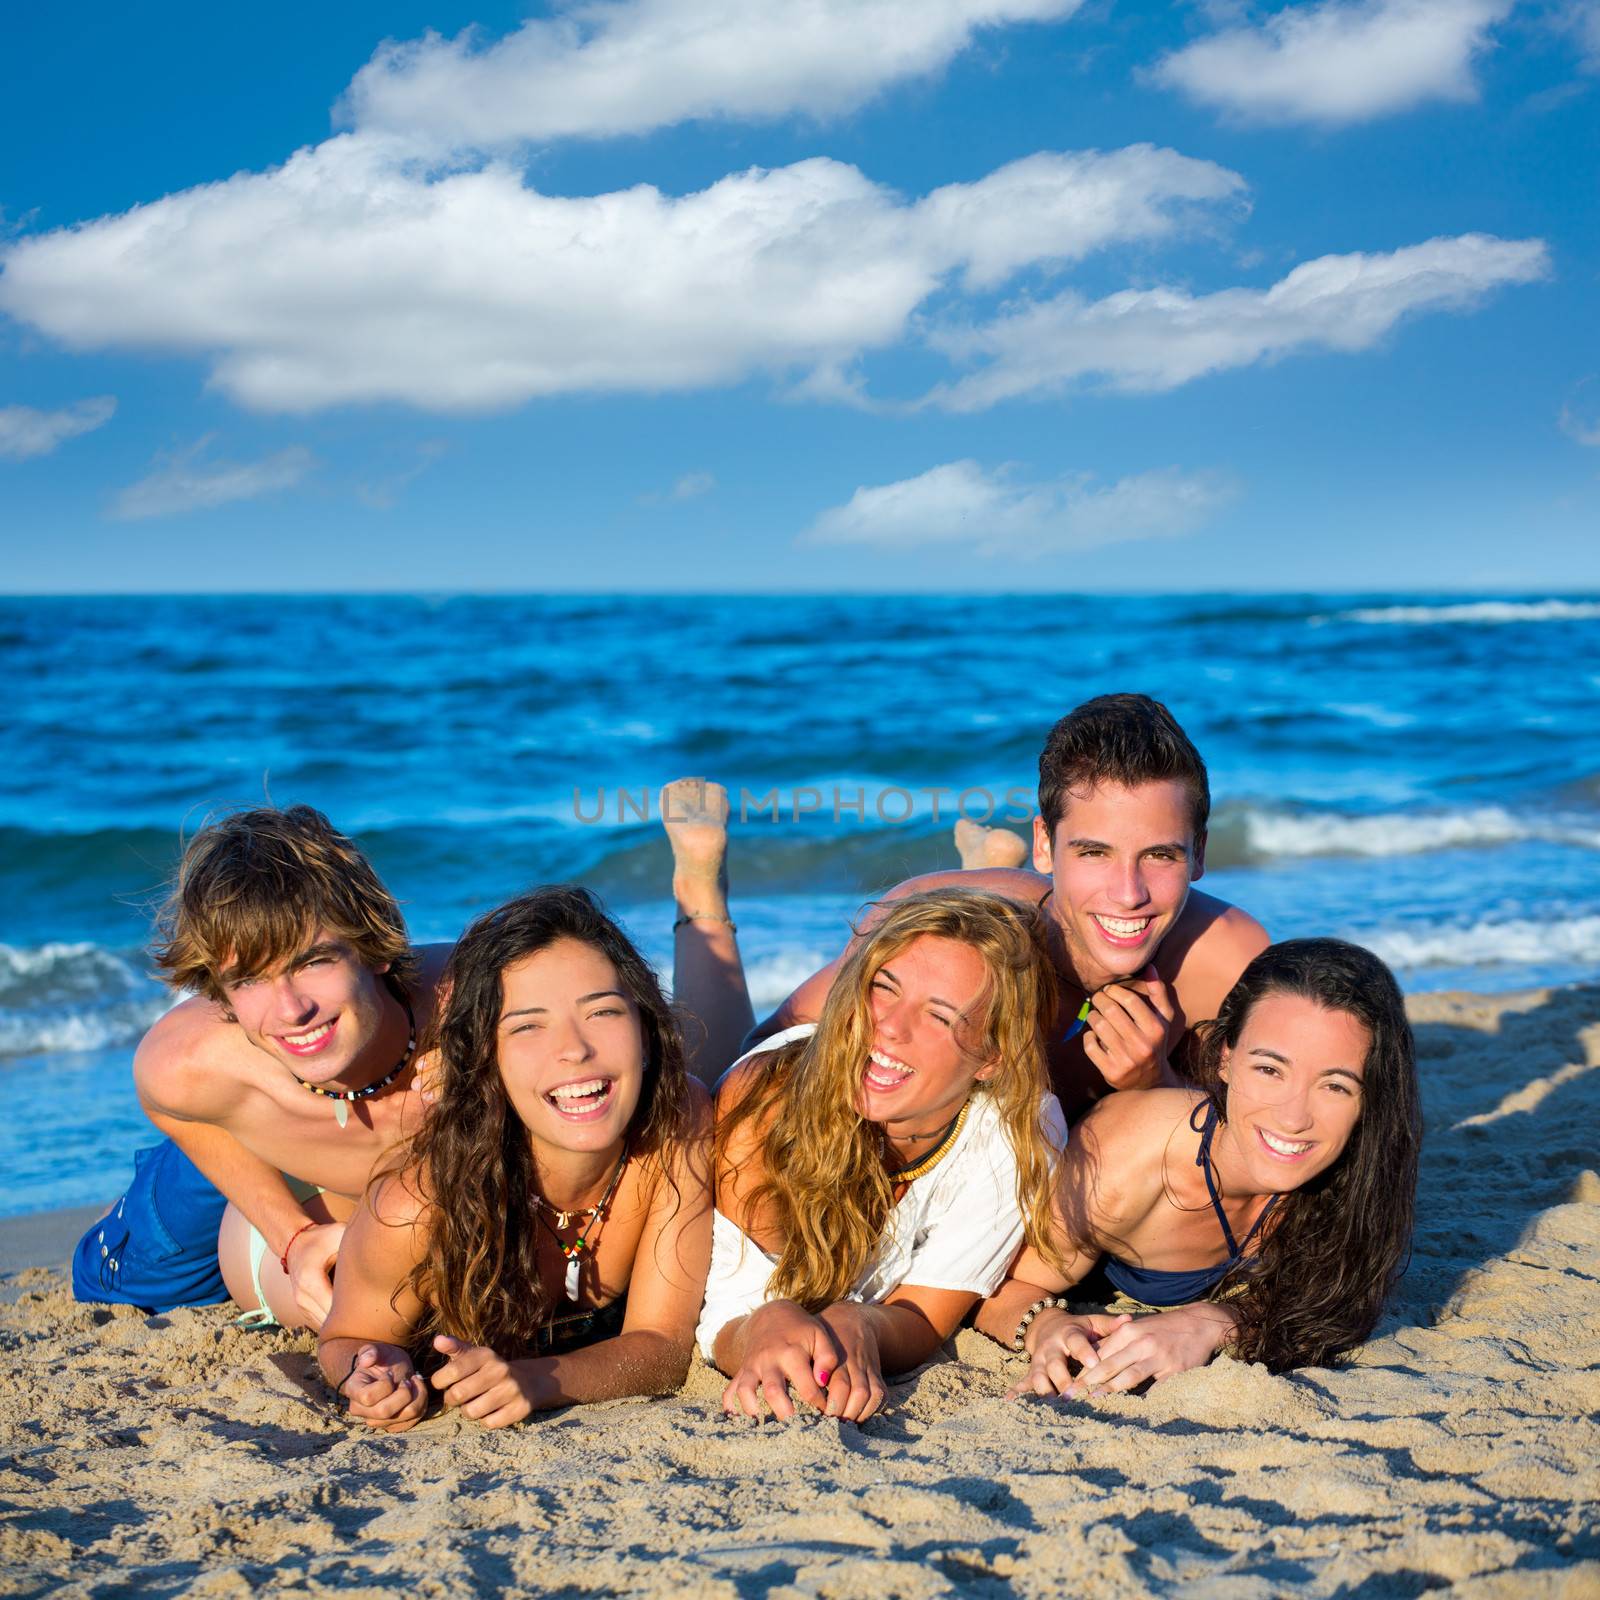 Boys and girls teen group having fun happy on the blue beach sand